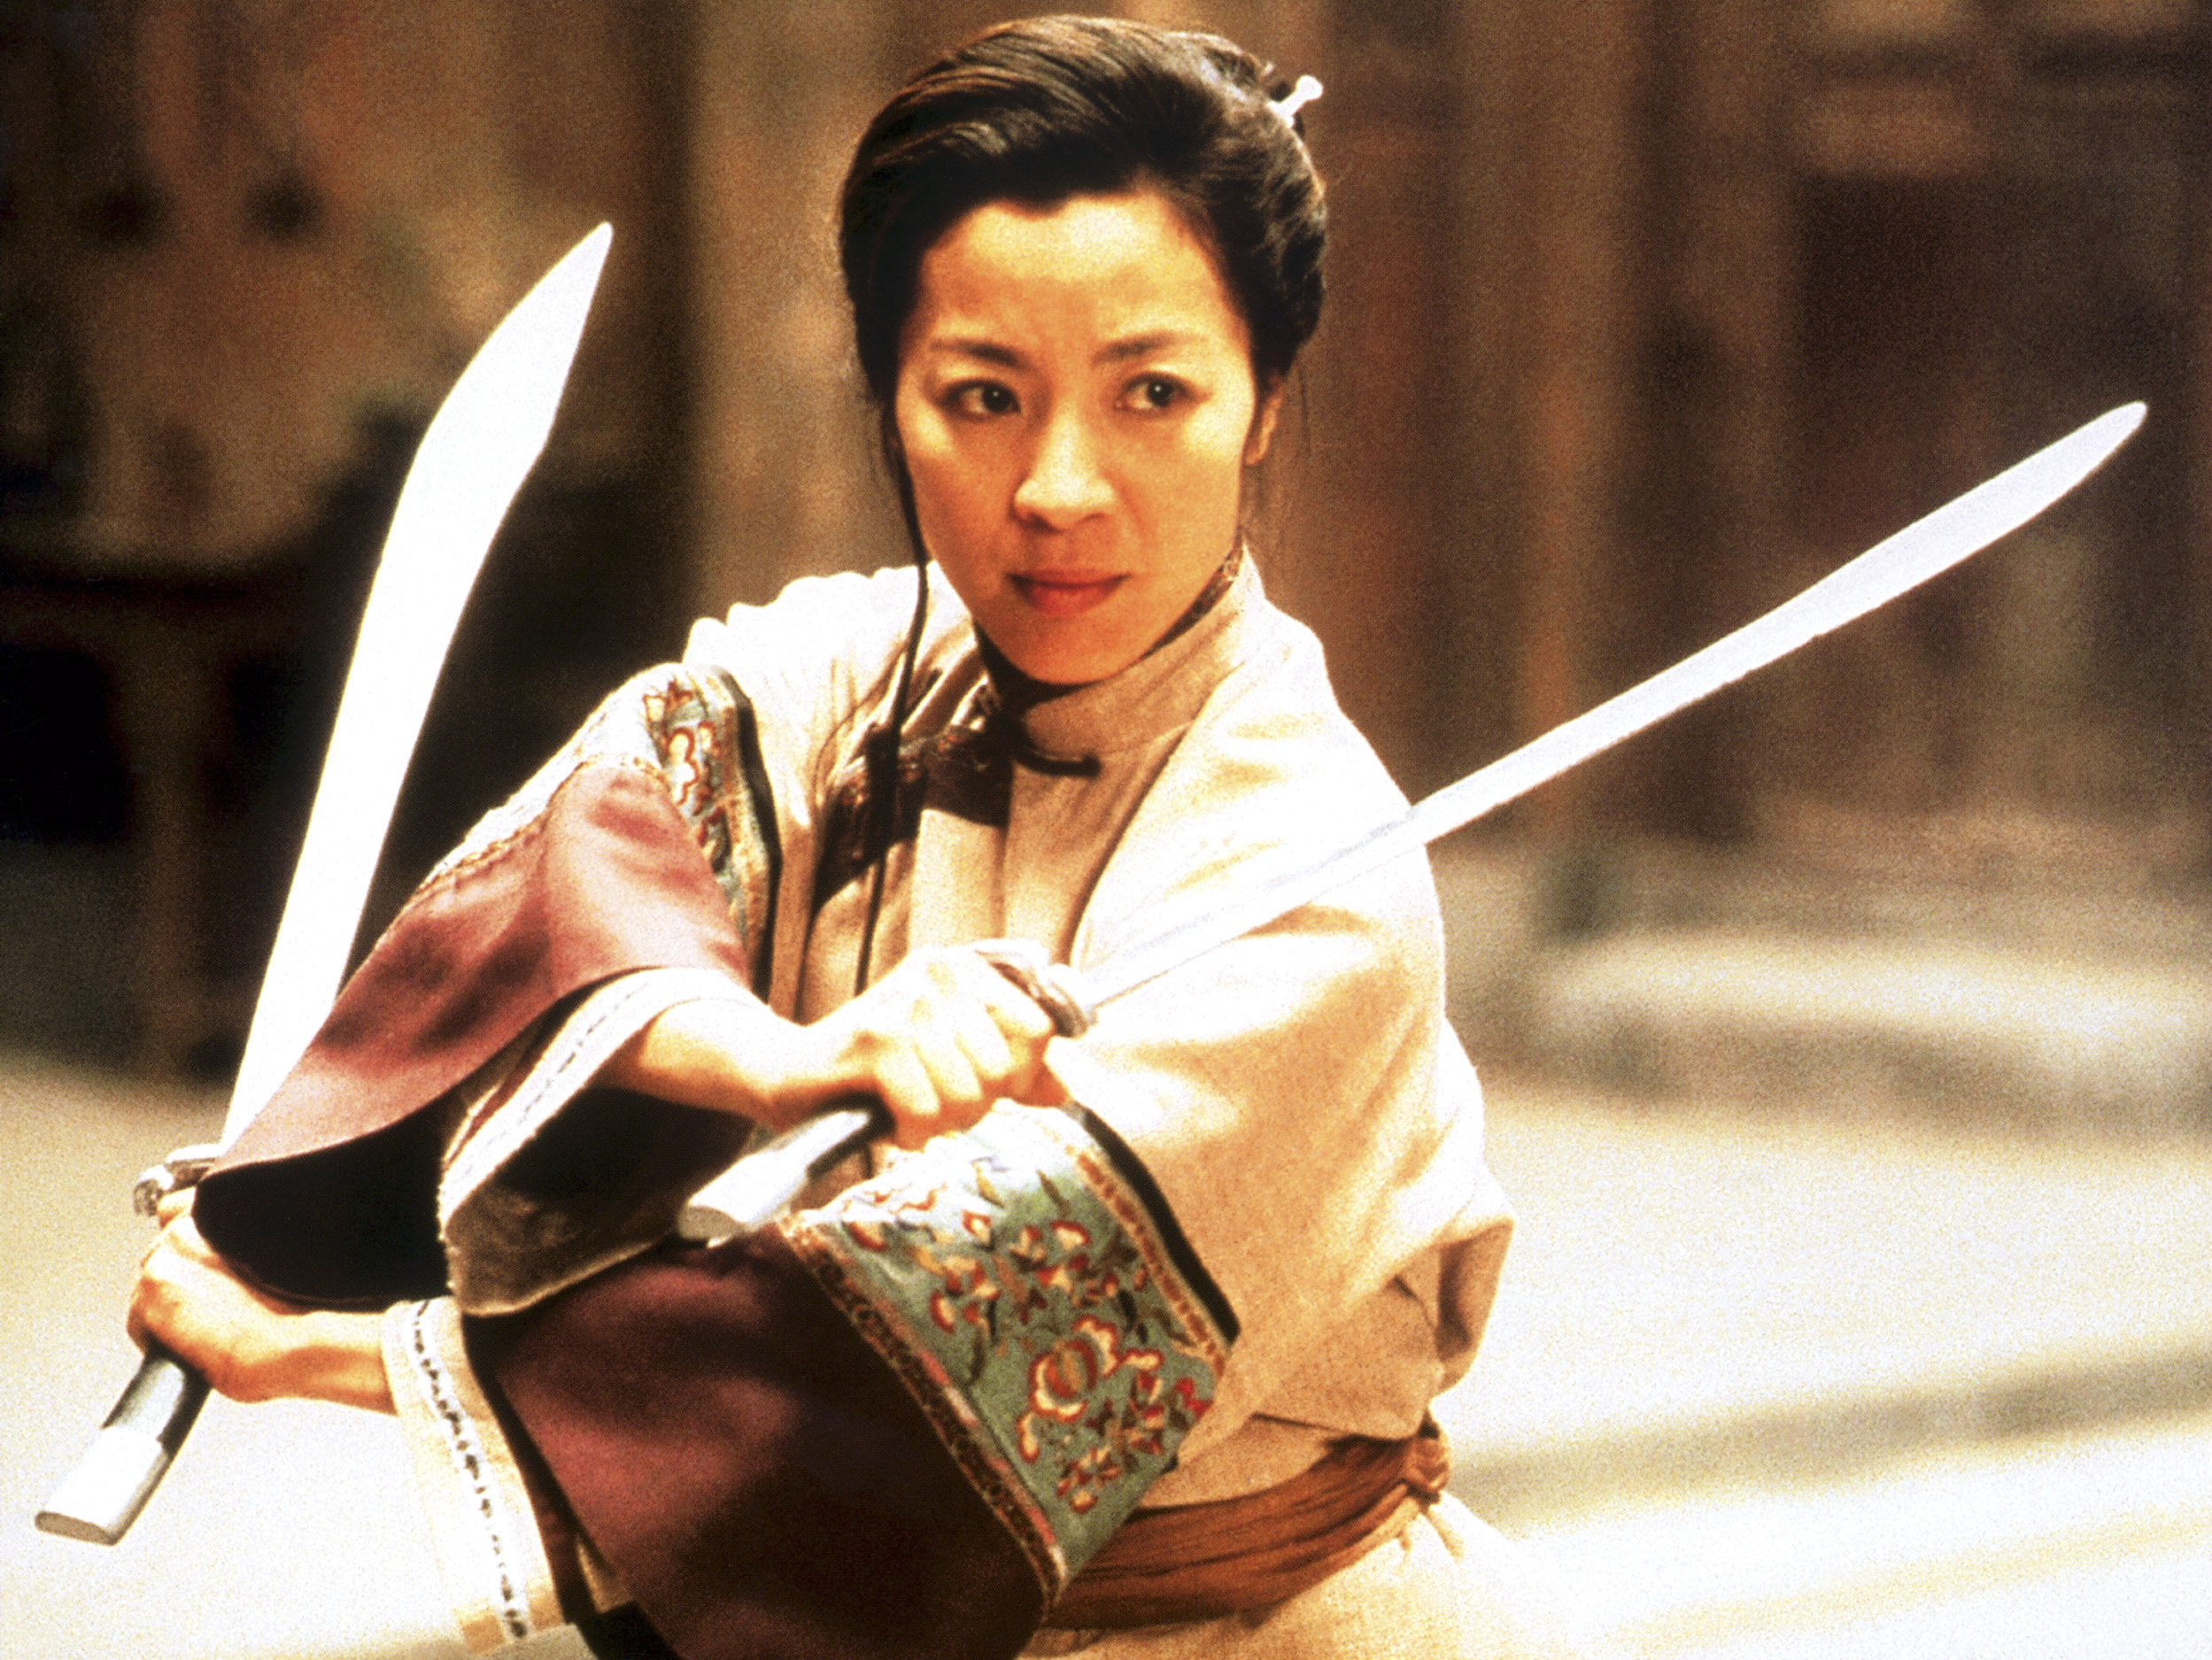 michelle yeoh wielding swords in crouching tiger, hidden dragon